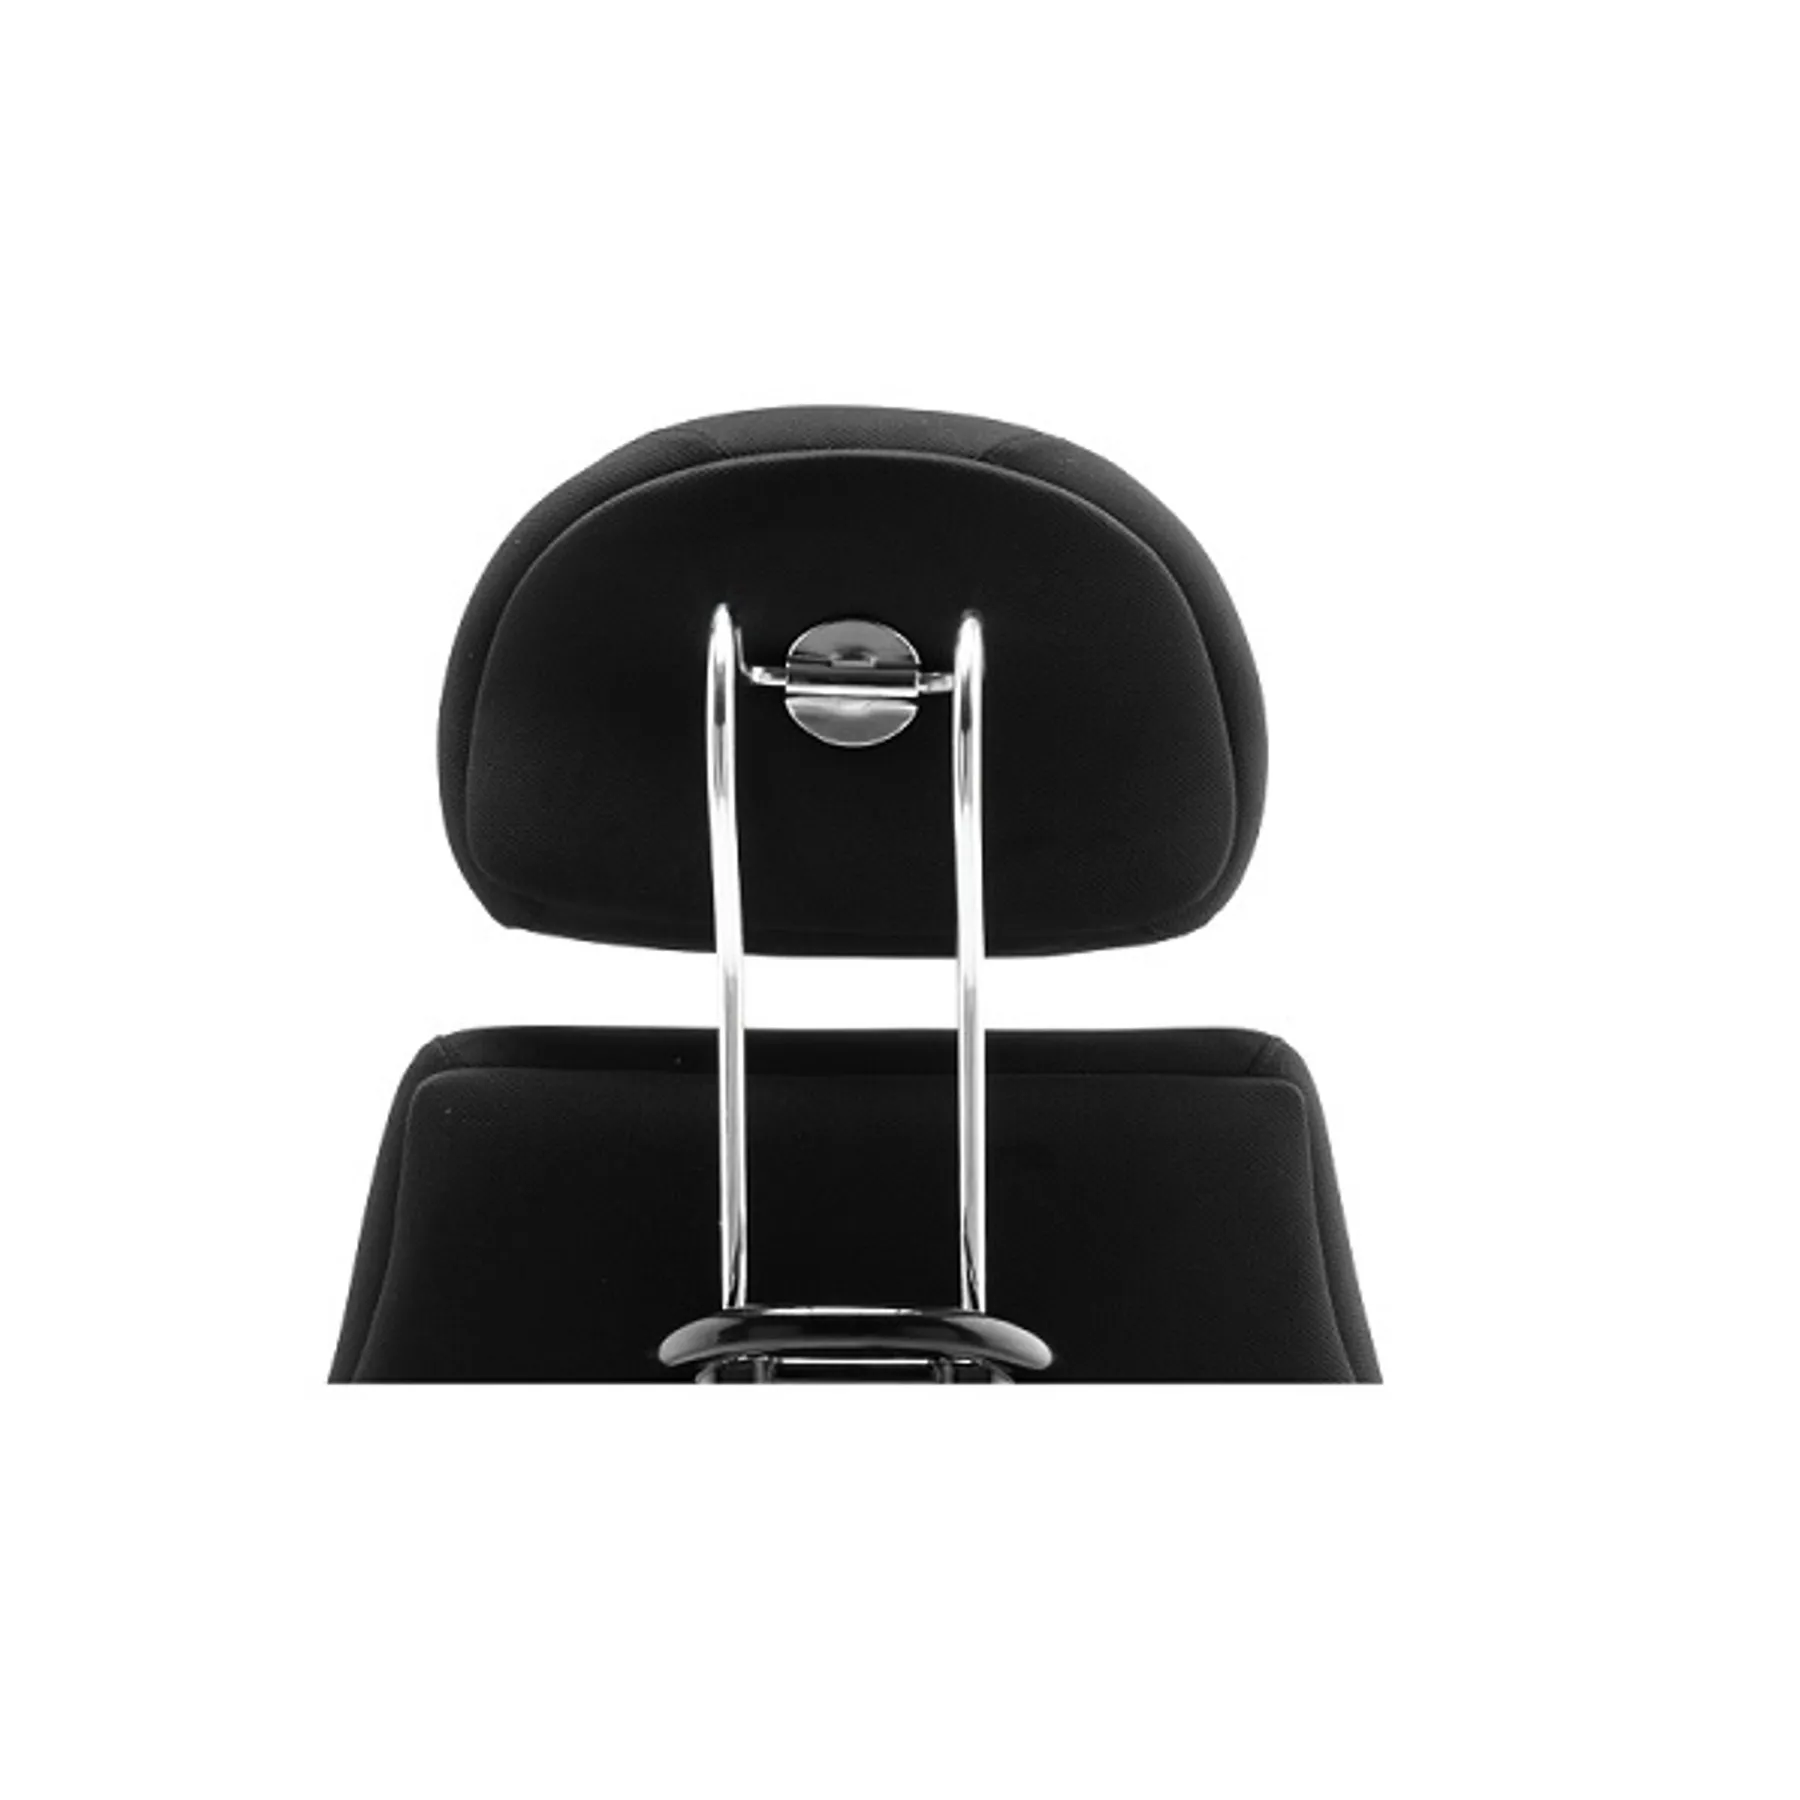 Lof Direct Dynamic Chiro Plus Posture Chair Black with Headrest rear